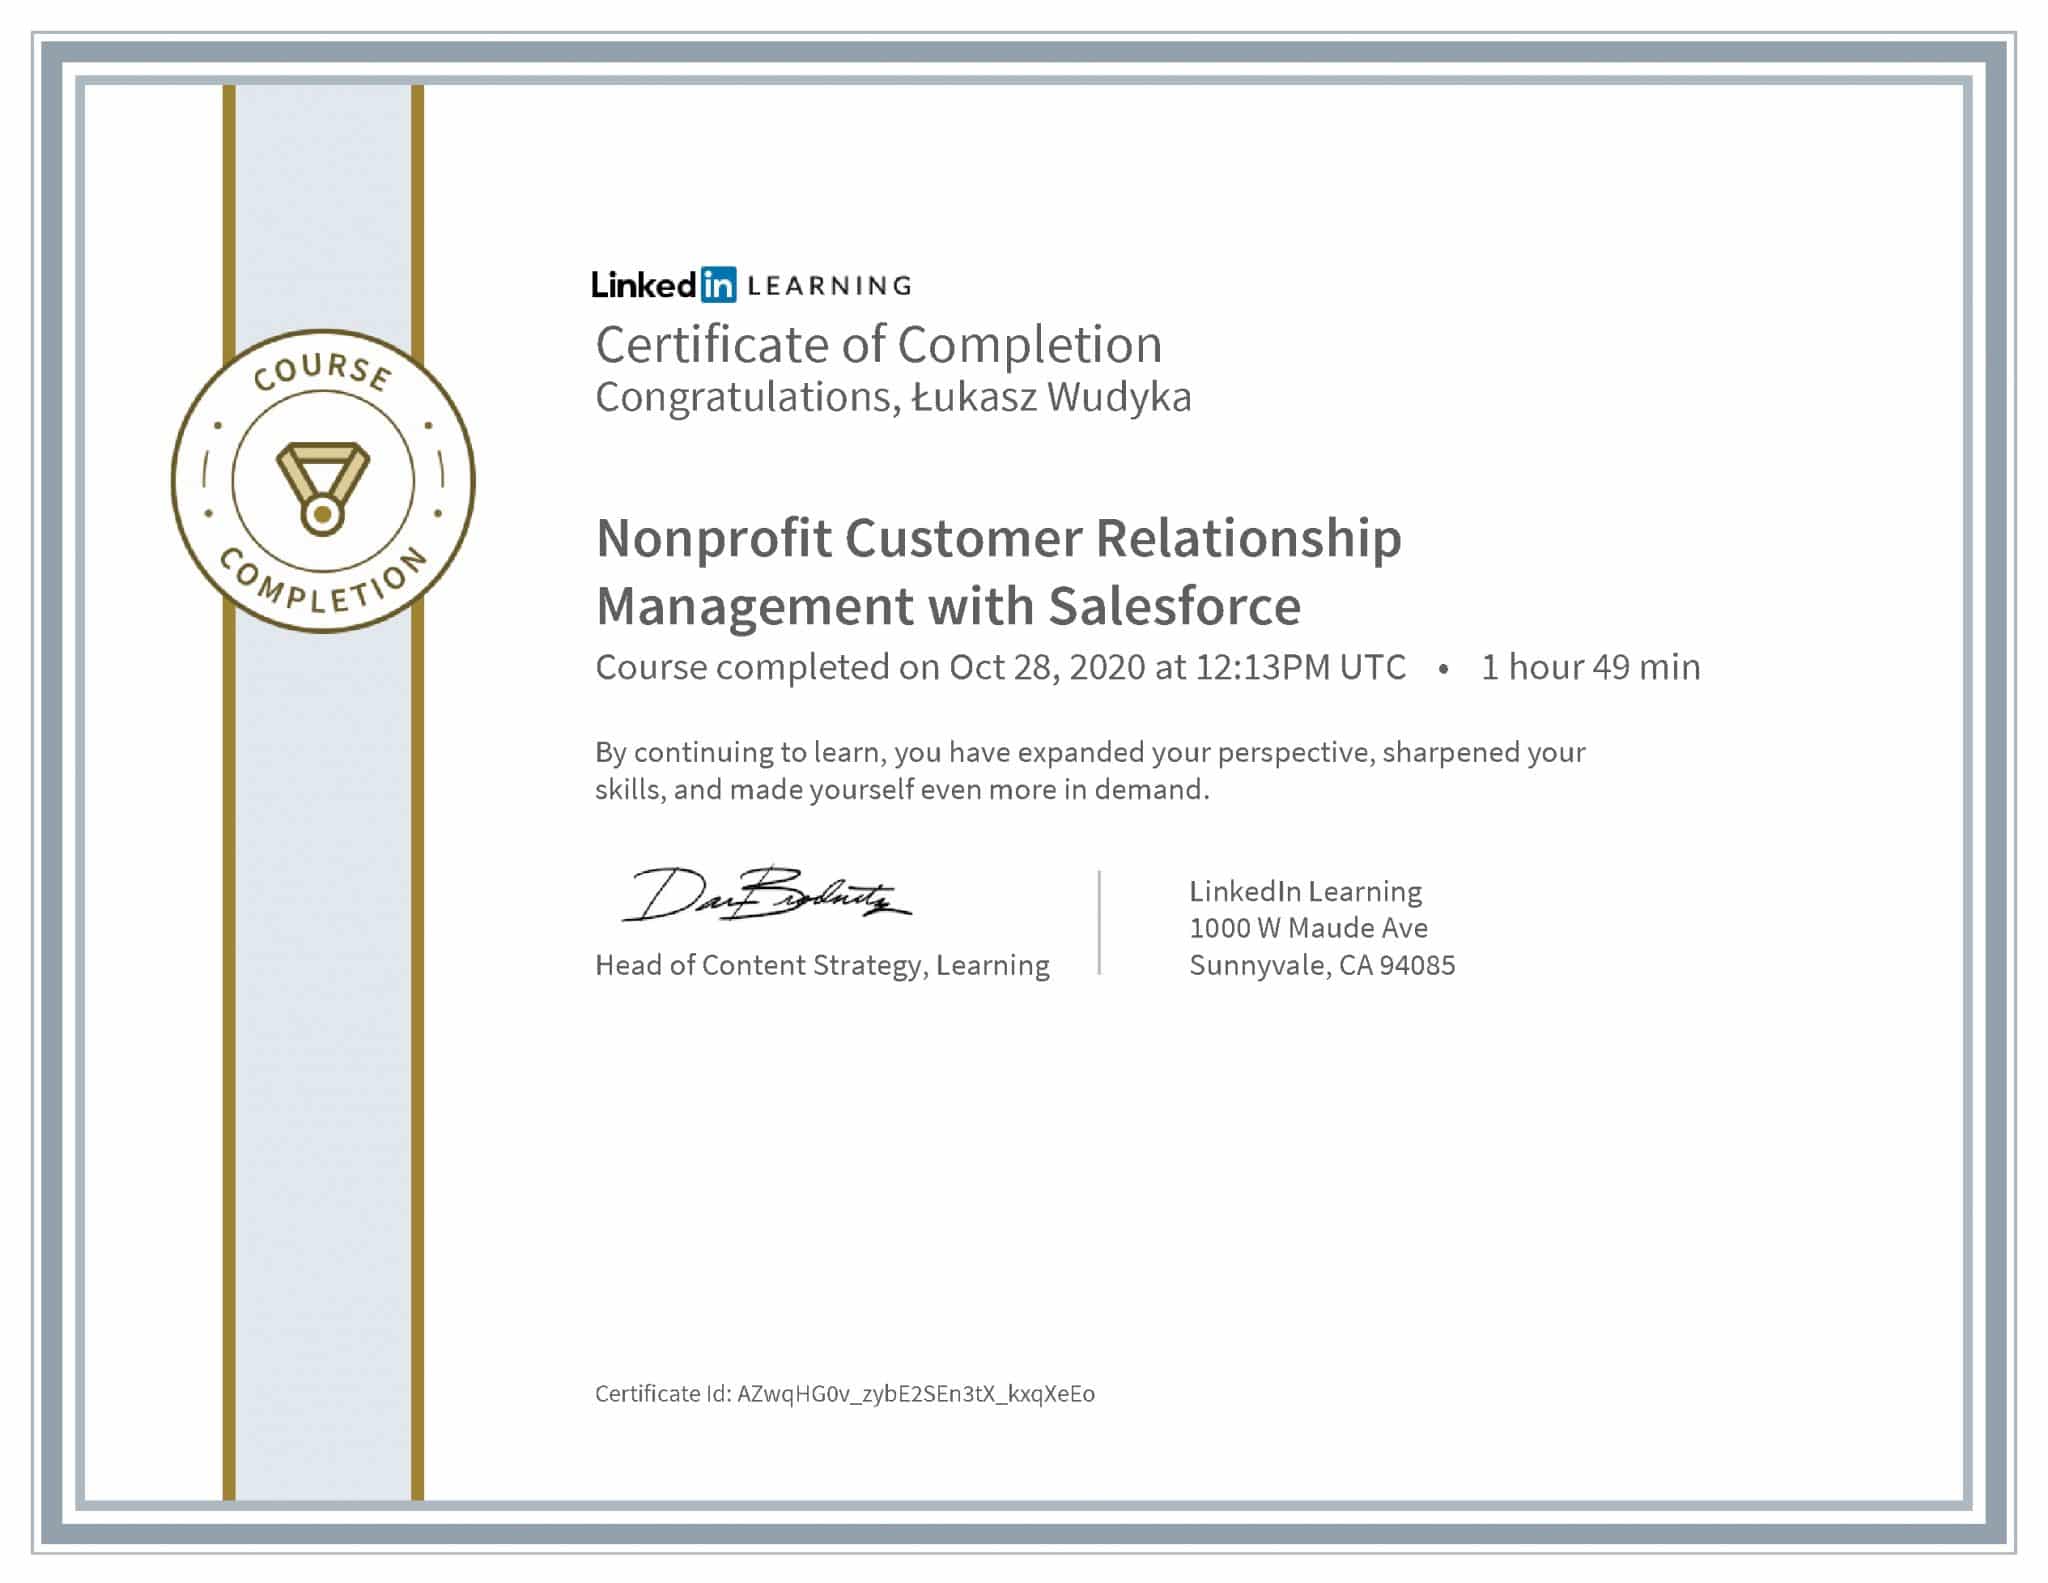 Łukasz Wudyka certyfikat LinkedIn Nonprofit Customer Relationship Management with Salesforce